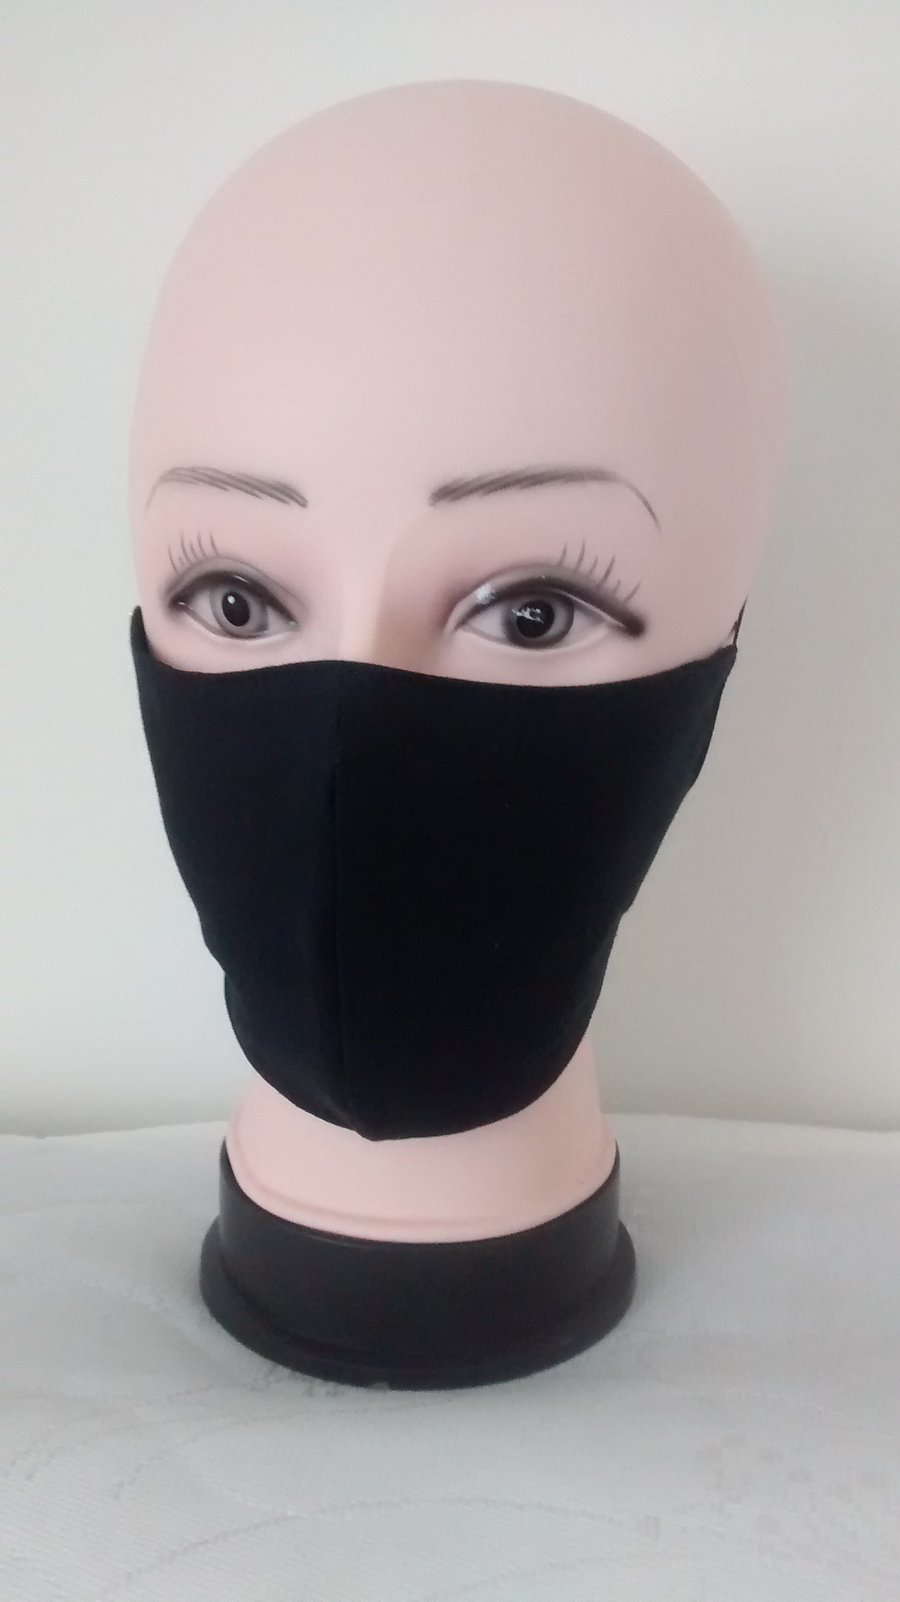 Handmade 3 layers black reusable adult face mask.